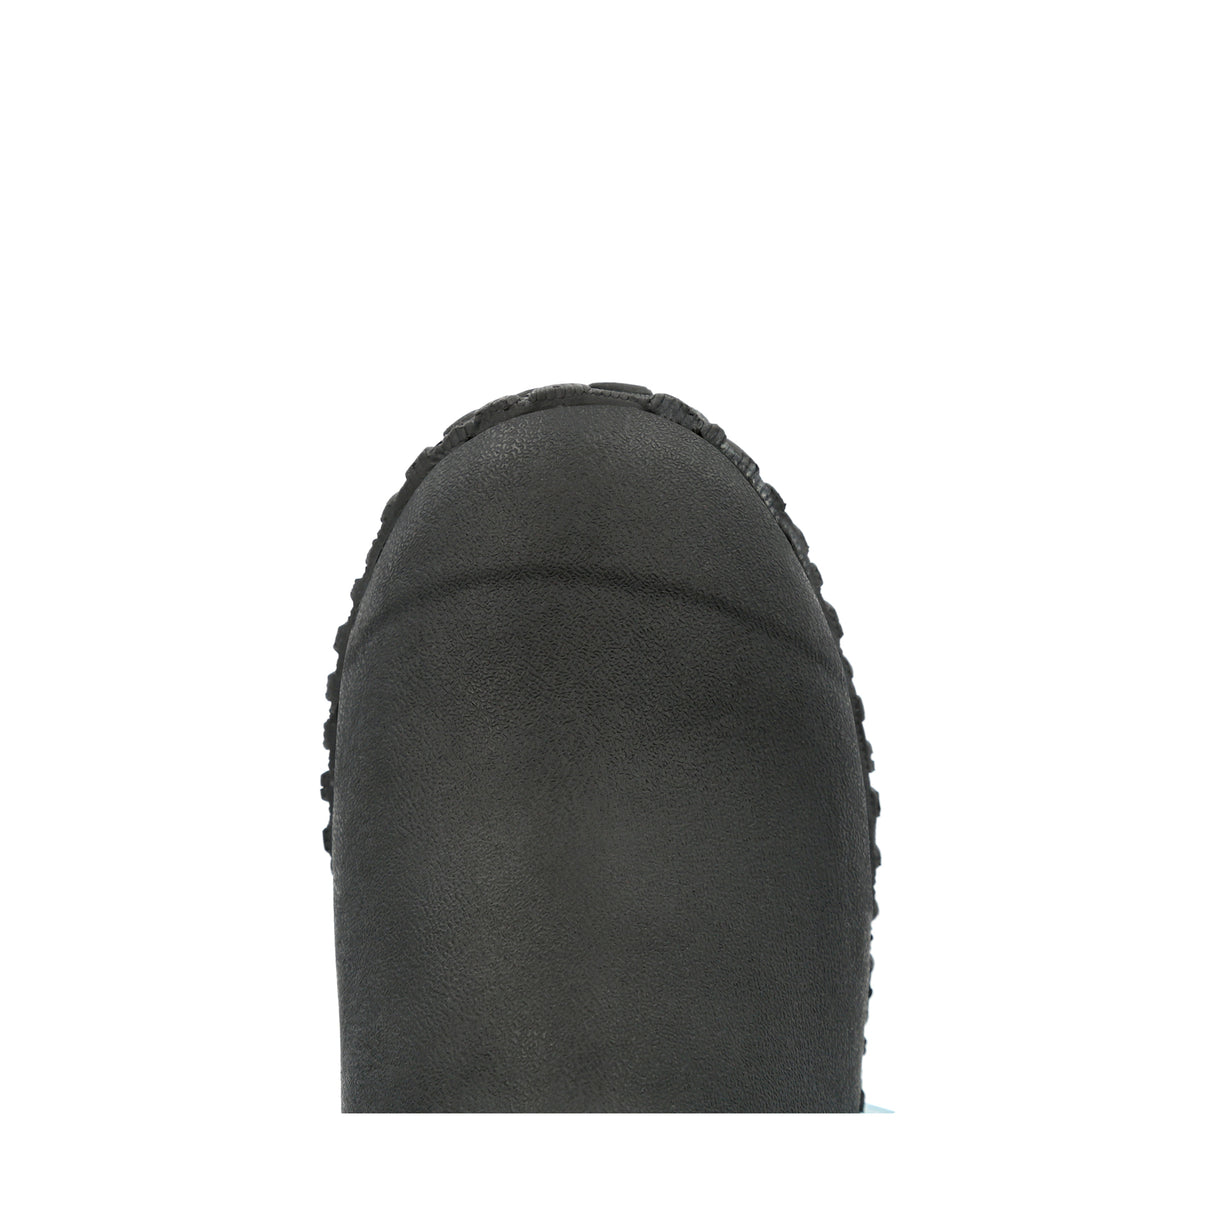 Women's RHS Muckster II Short Boots Black Grey Plaid Print